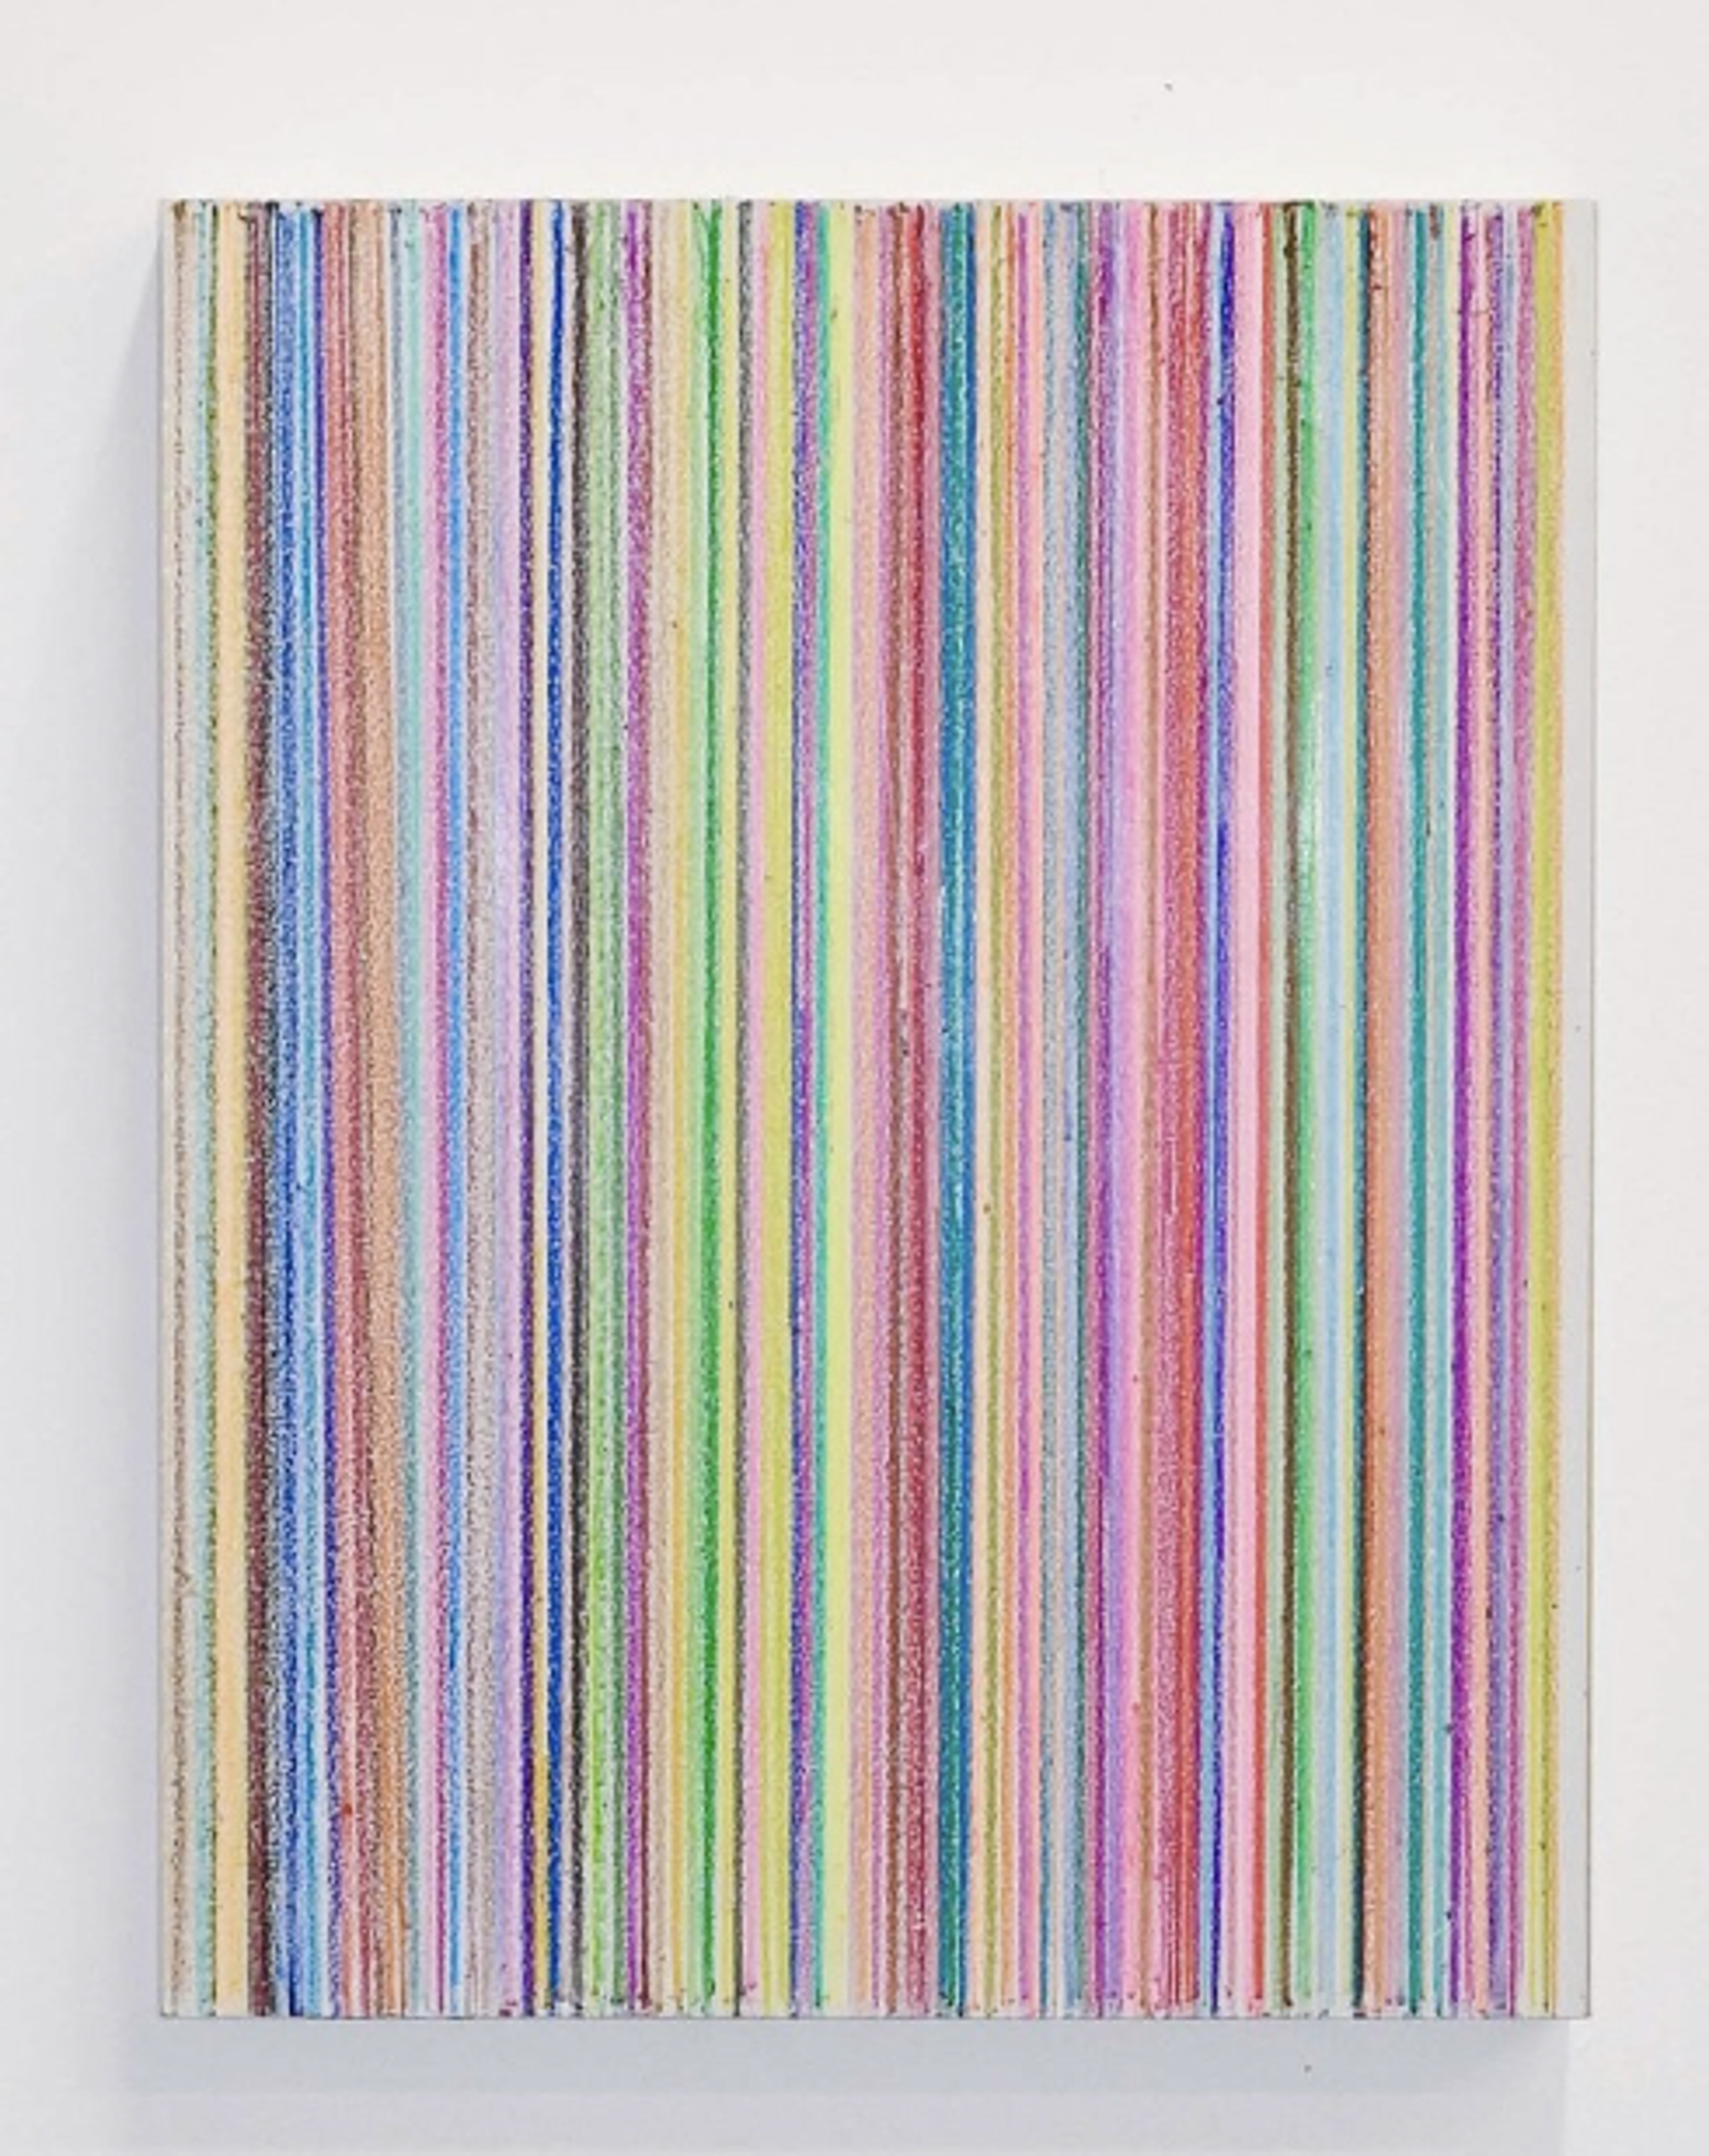 All my Crayons, Alphabetized by Joel Swanson